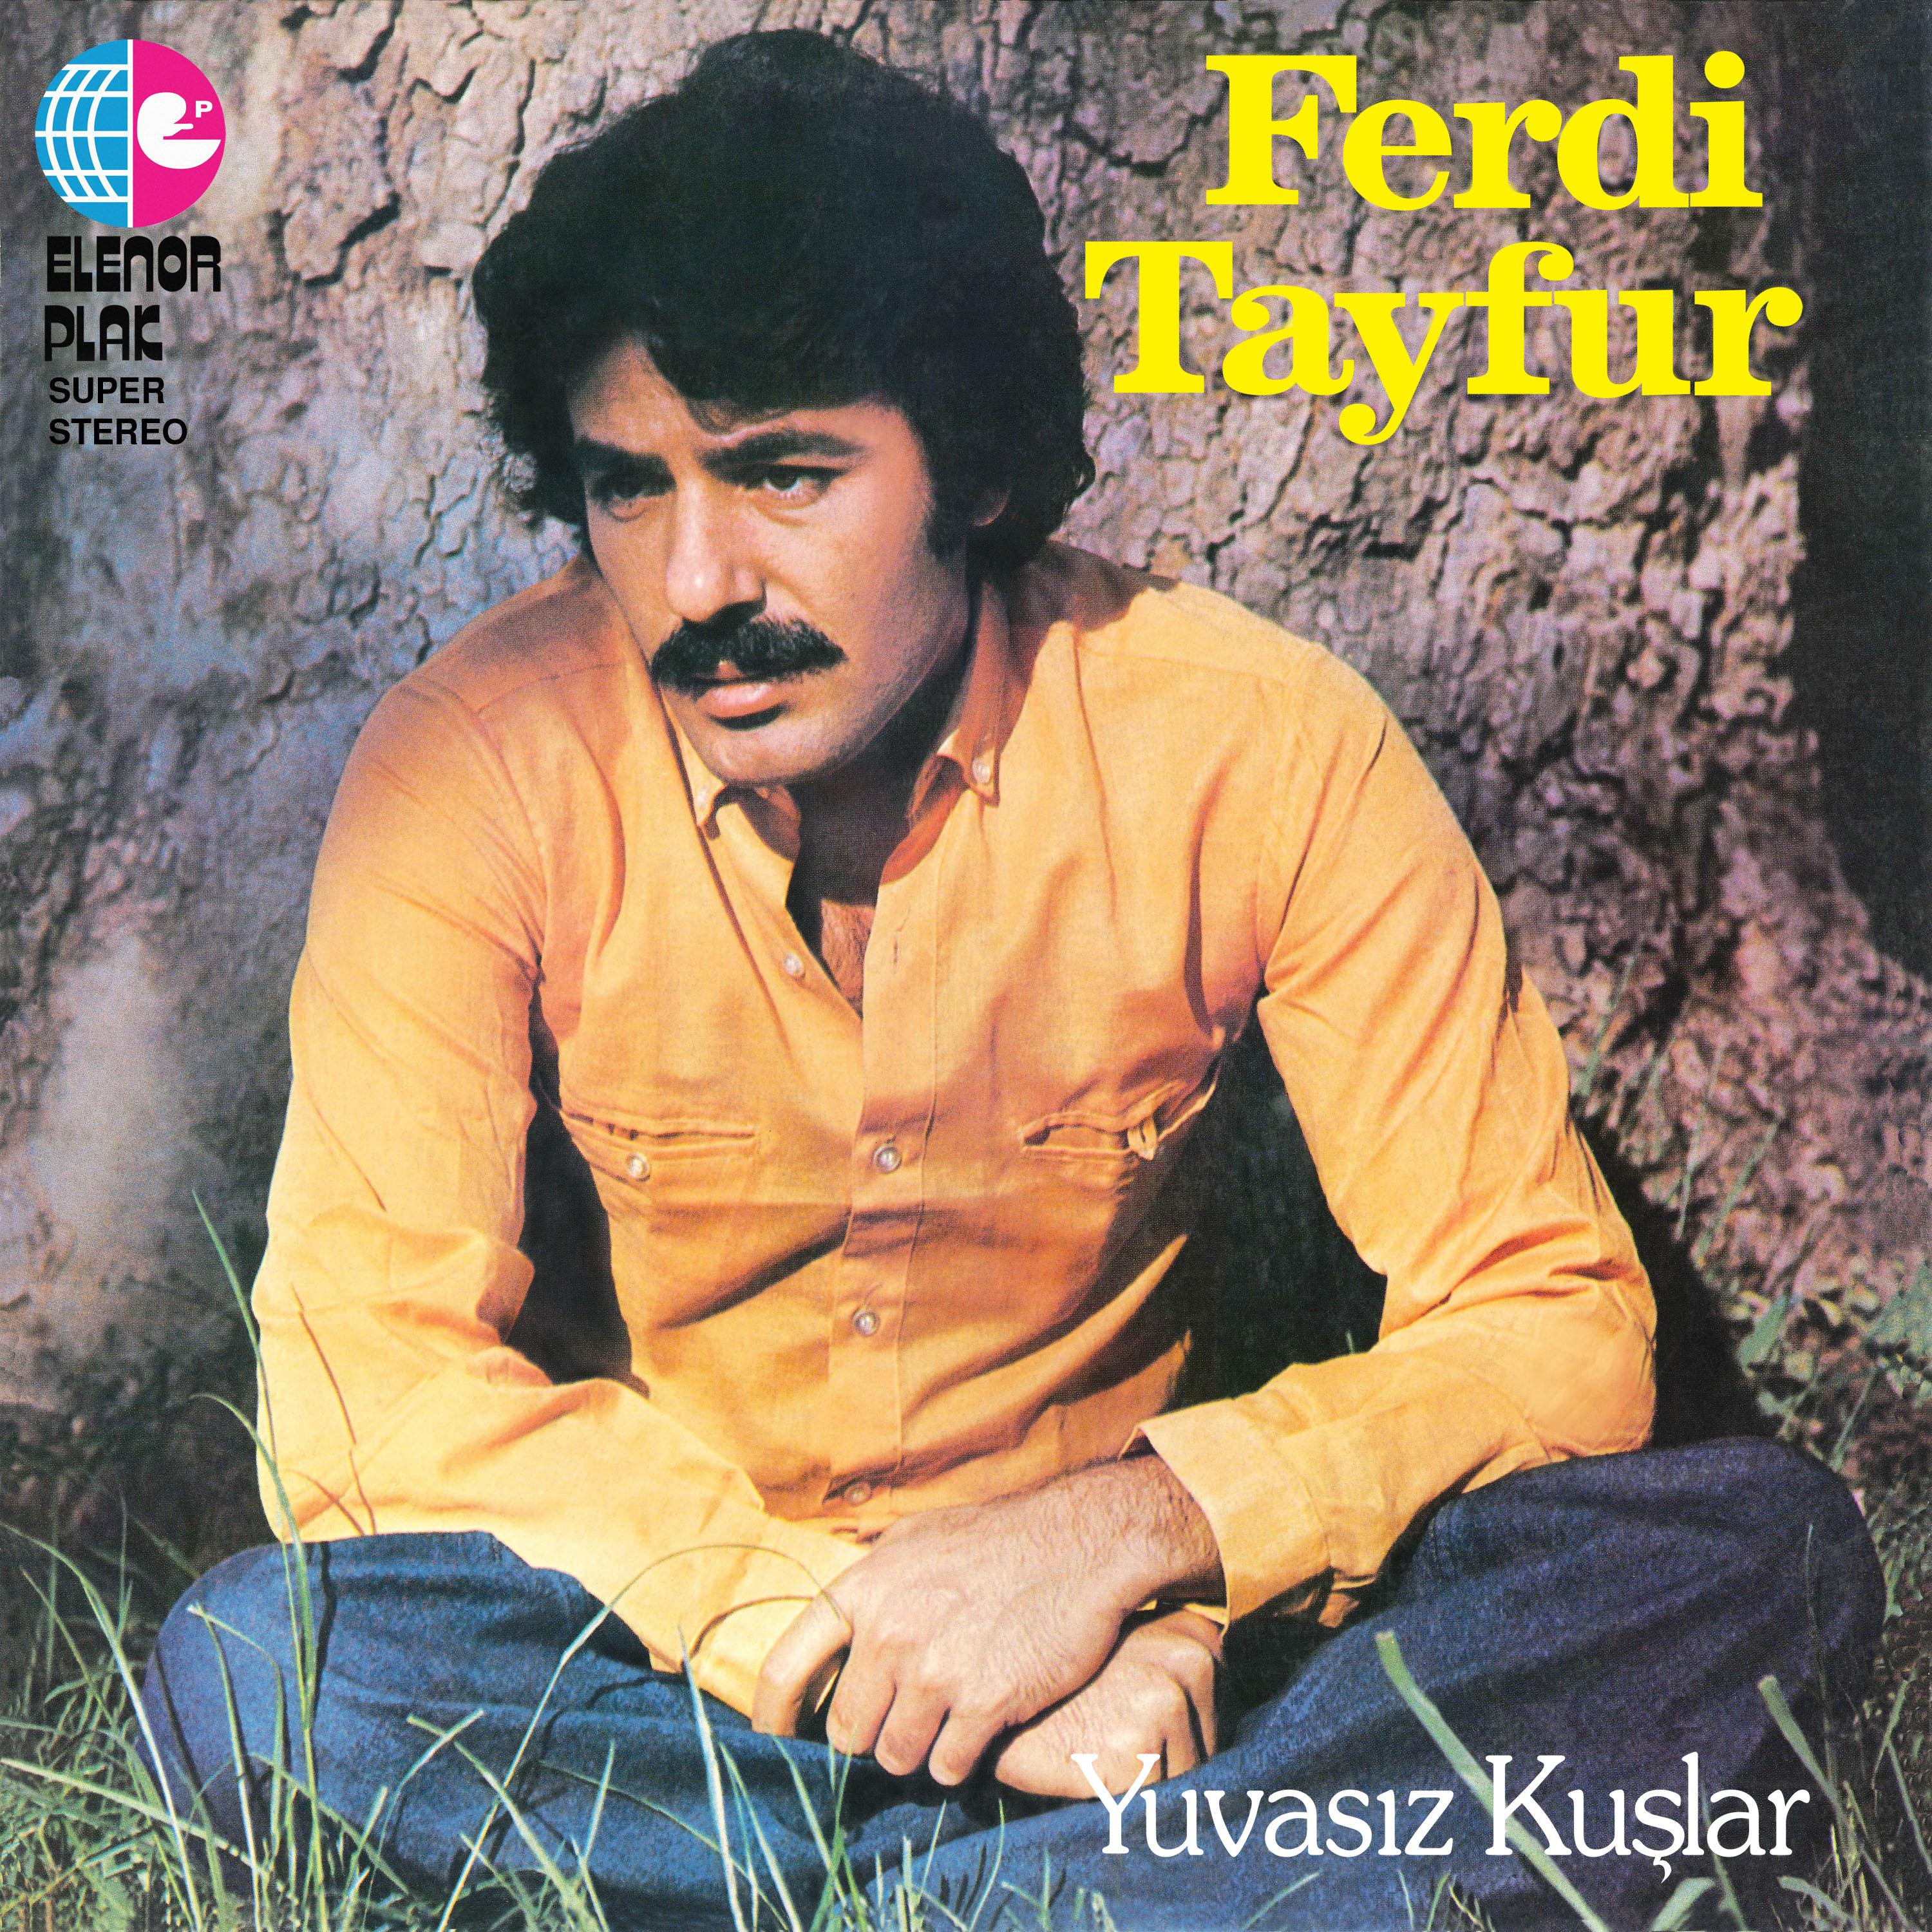 Альбом Yuvasız Kuşlar исполнителя Ferdi Tayfur